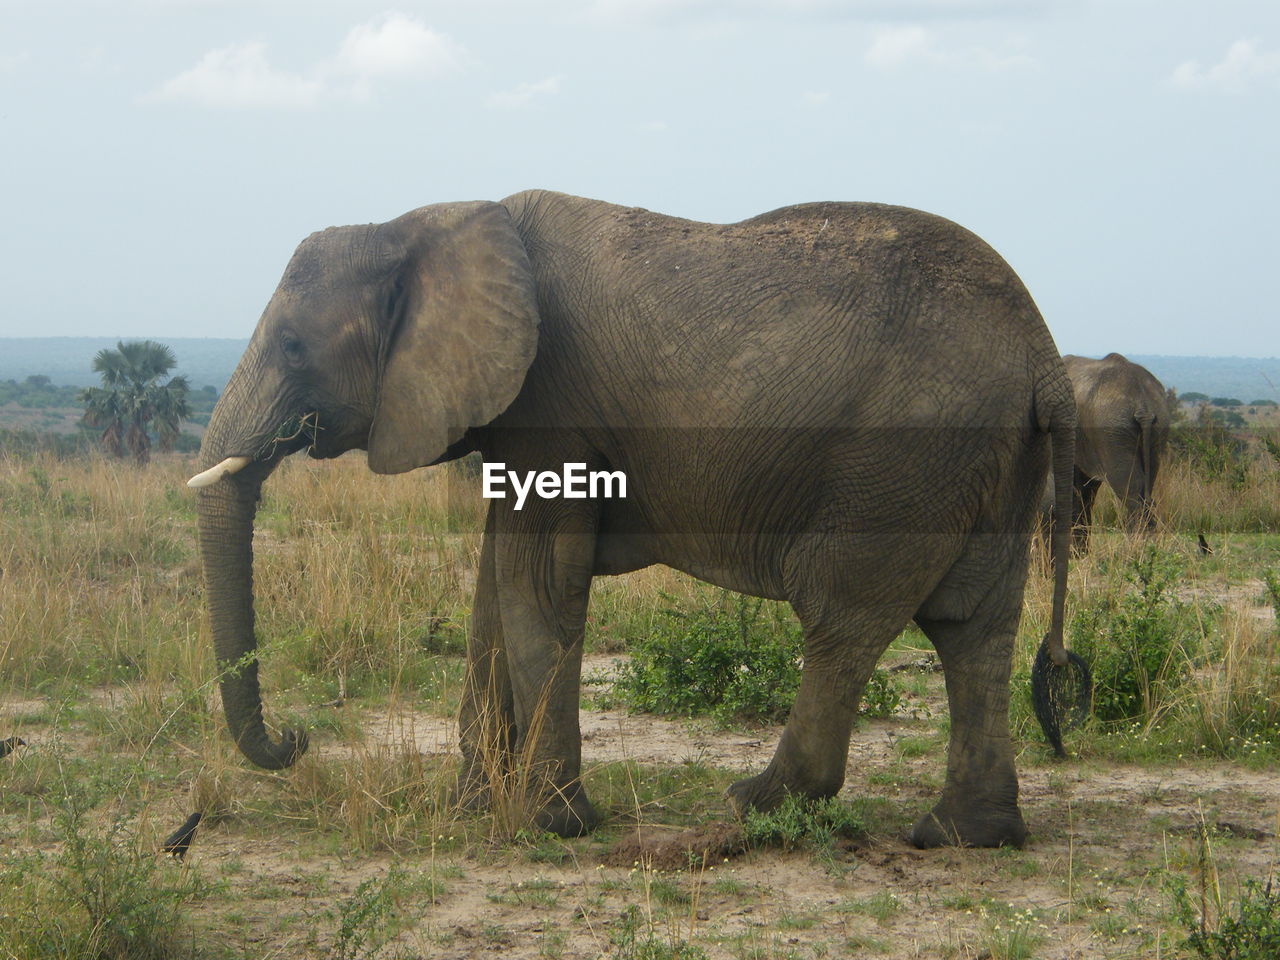 Elephant in uganda